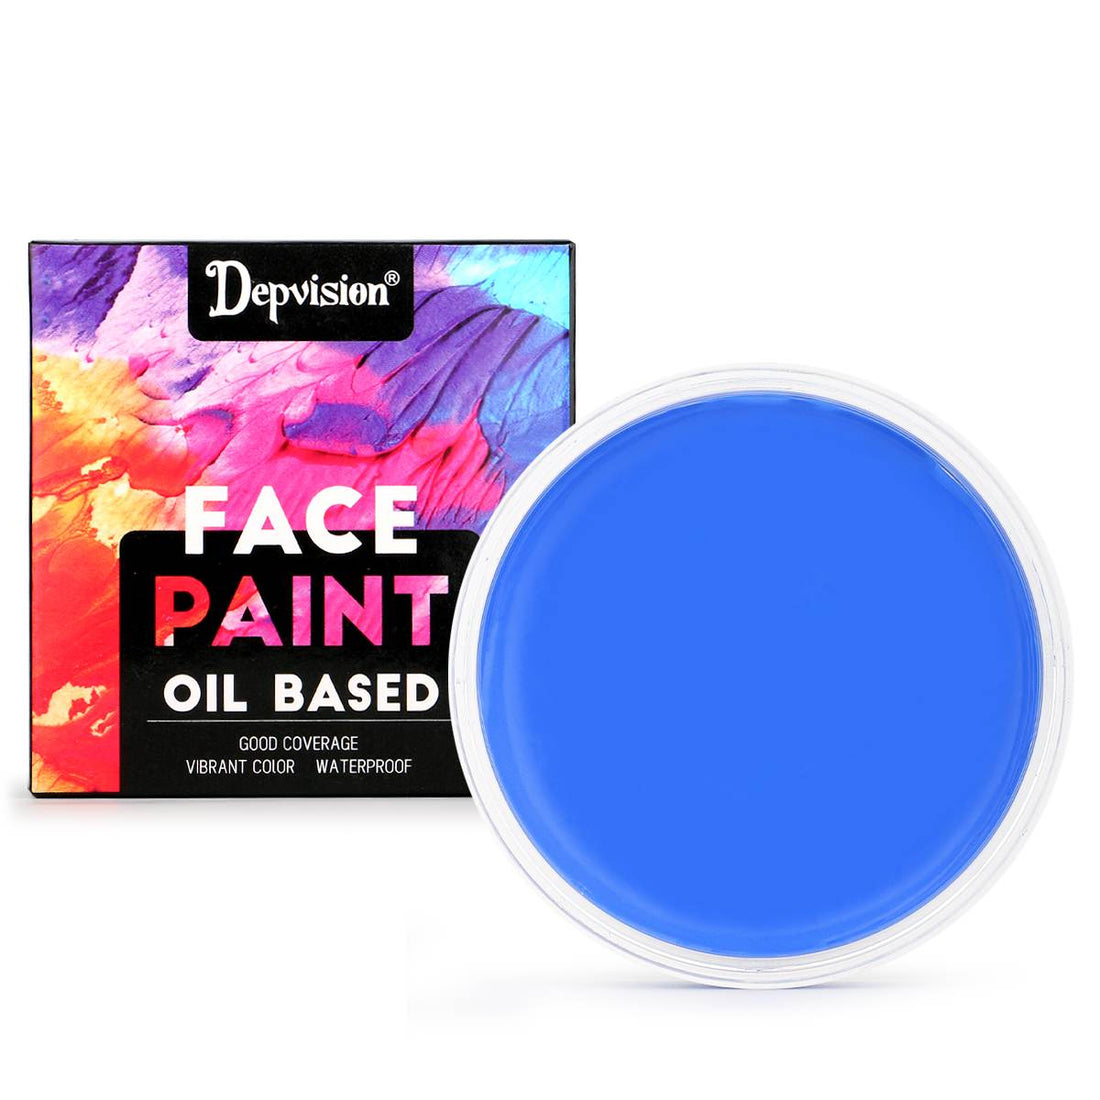 Waterproof Oil Based Face Paint - Blue